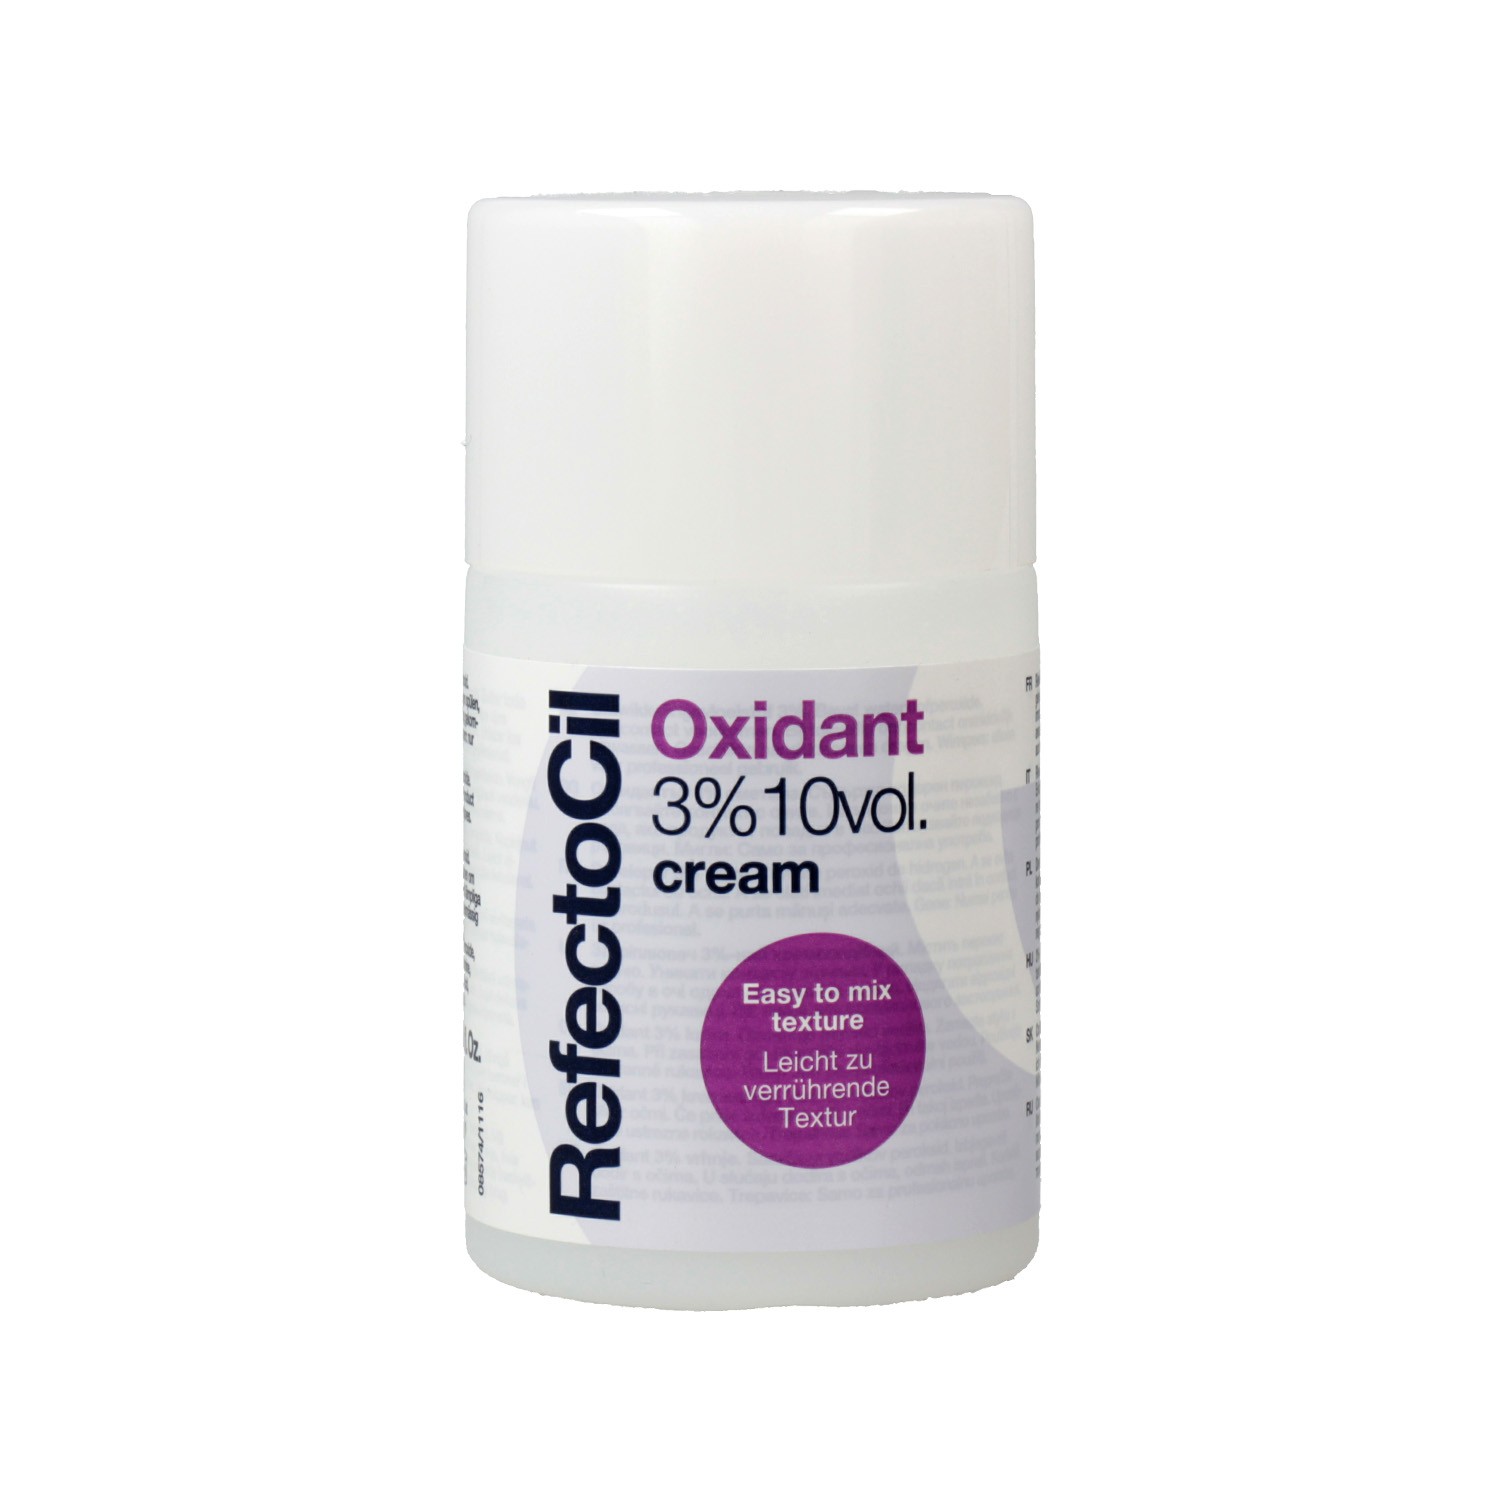 Refectocil Oxidante Crema 10vol (3%) 100 ml